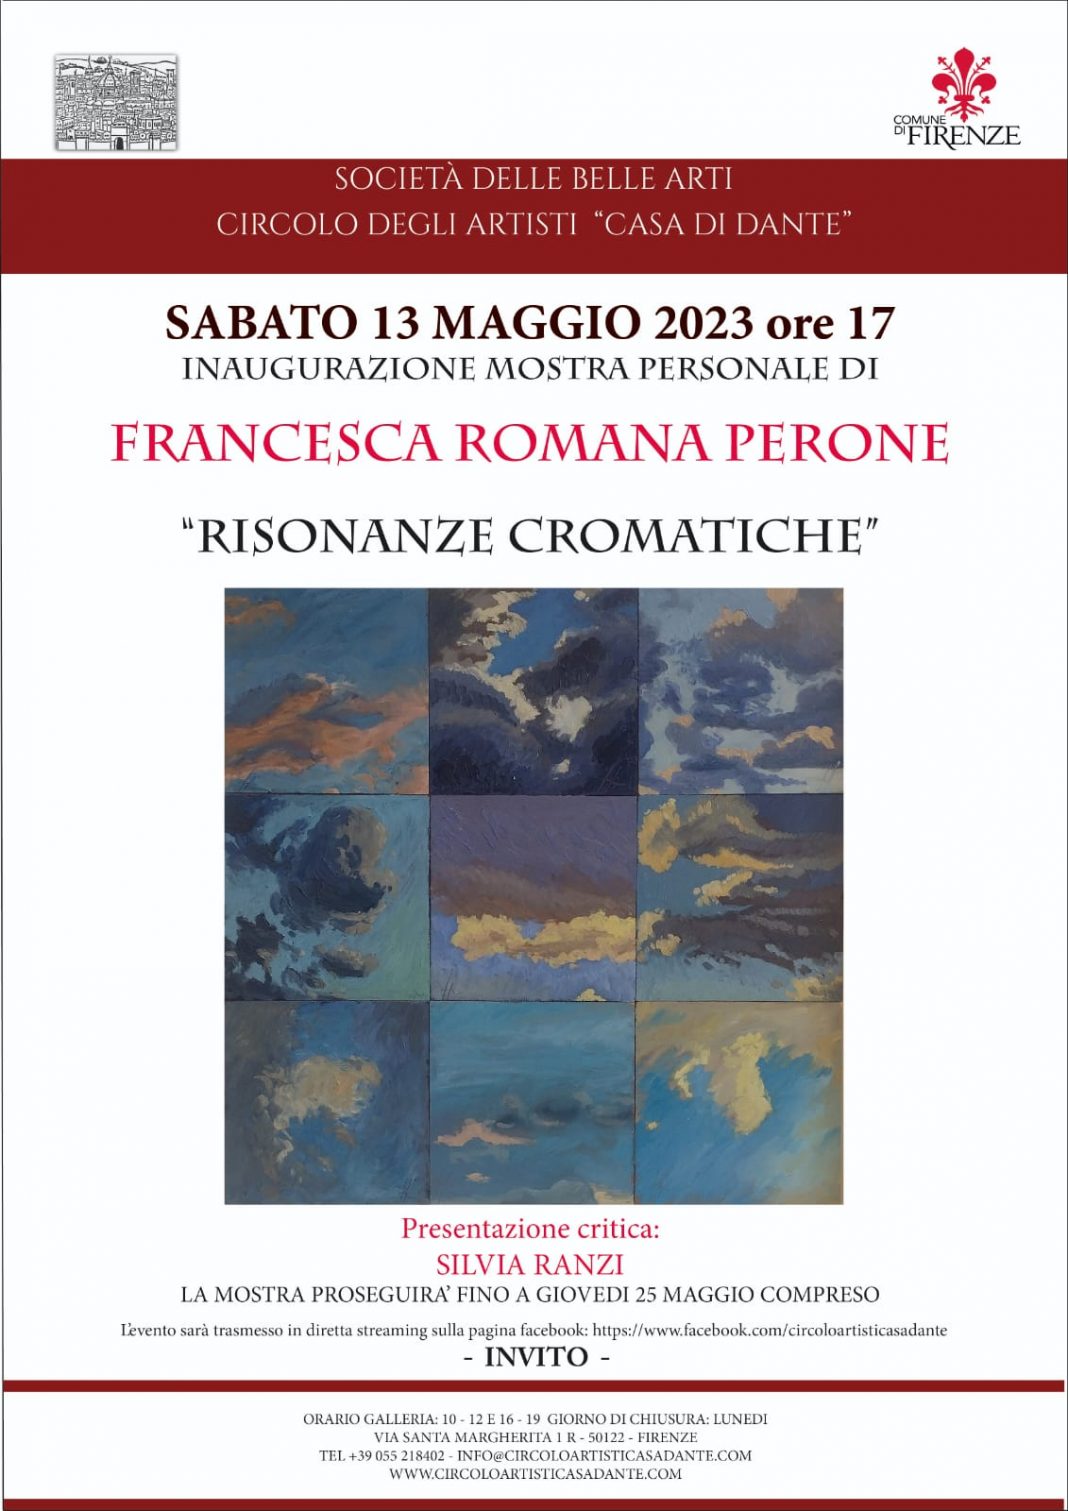 Francesca Romana Perone- Risonanze cromatichehttps://www.exibart.com/repository/media/formidable/11/img/72e/3FD21A31-4799-4C6C-8FA2-3D01D2956D61-1068x1511.jpeg